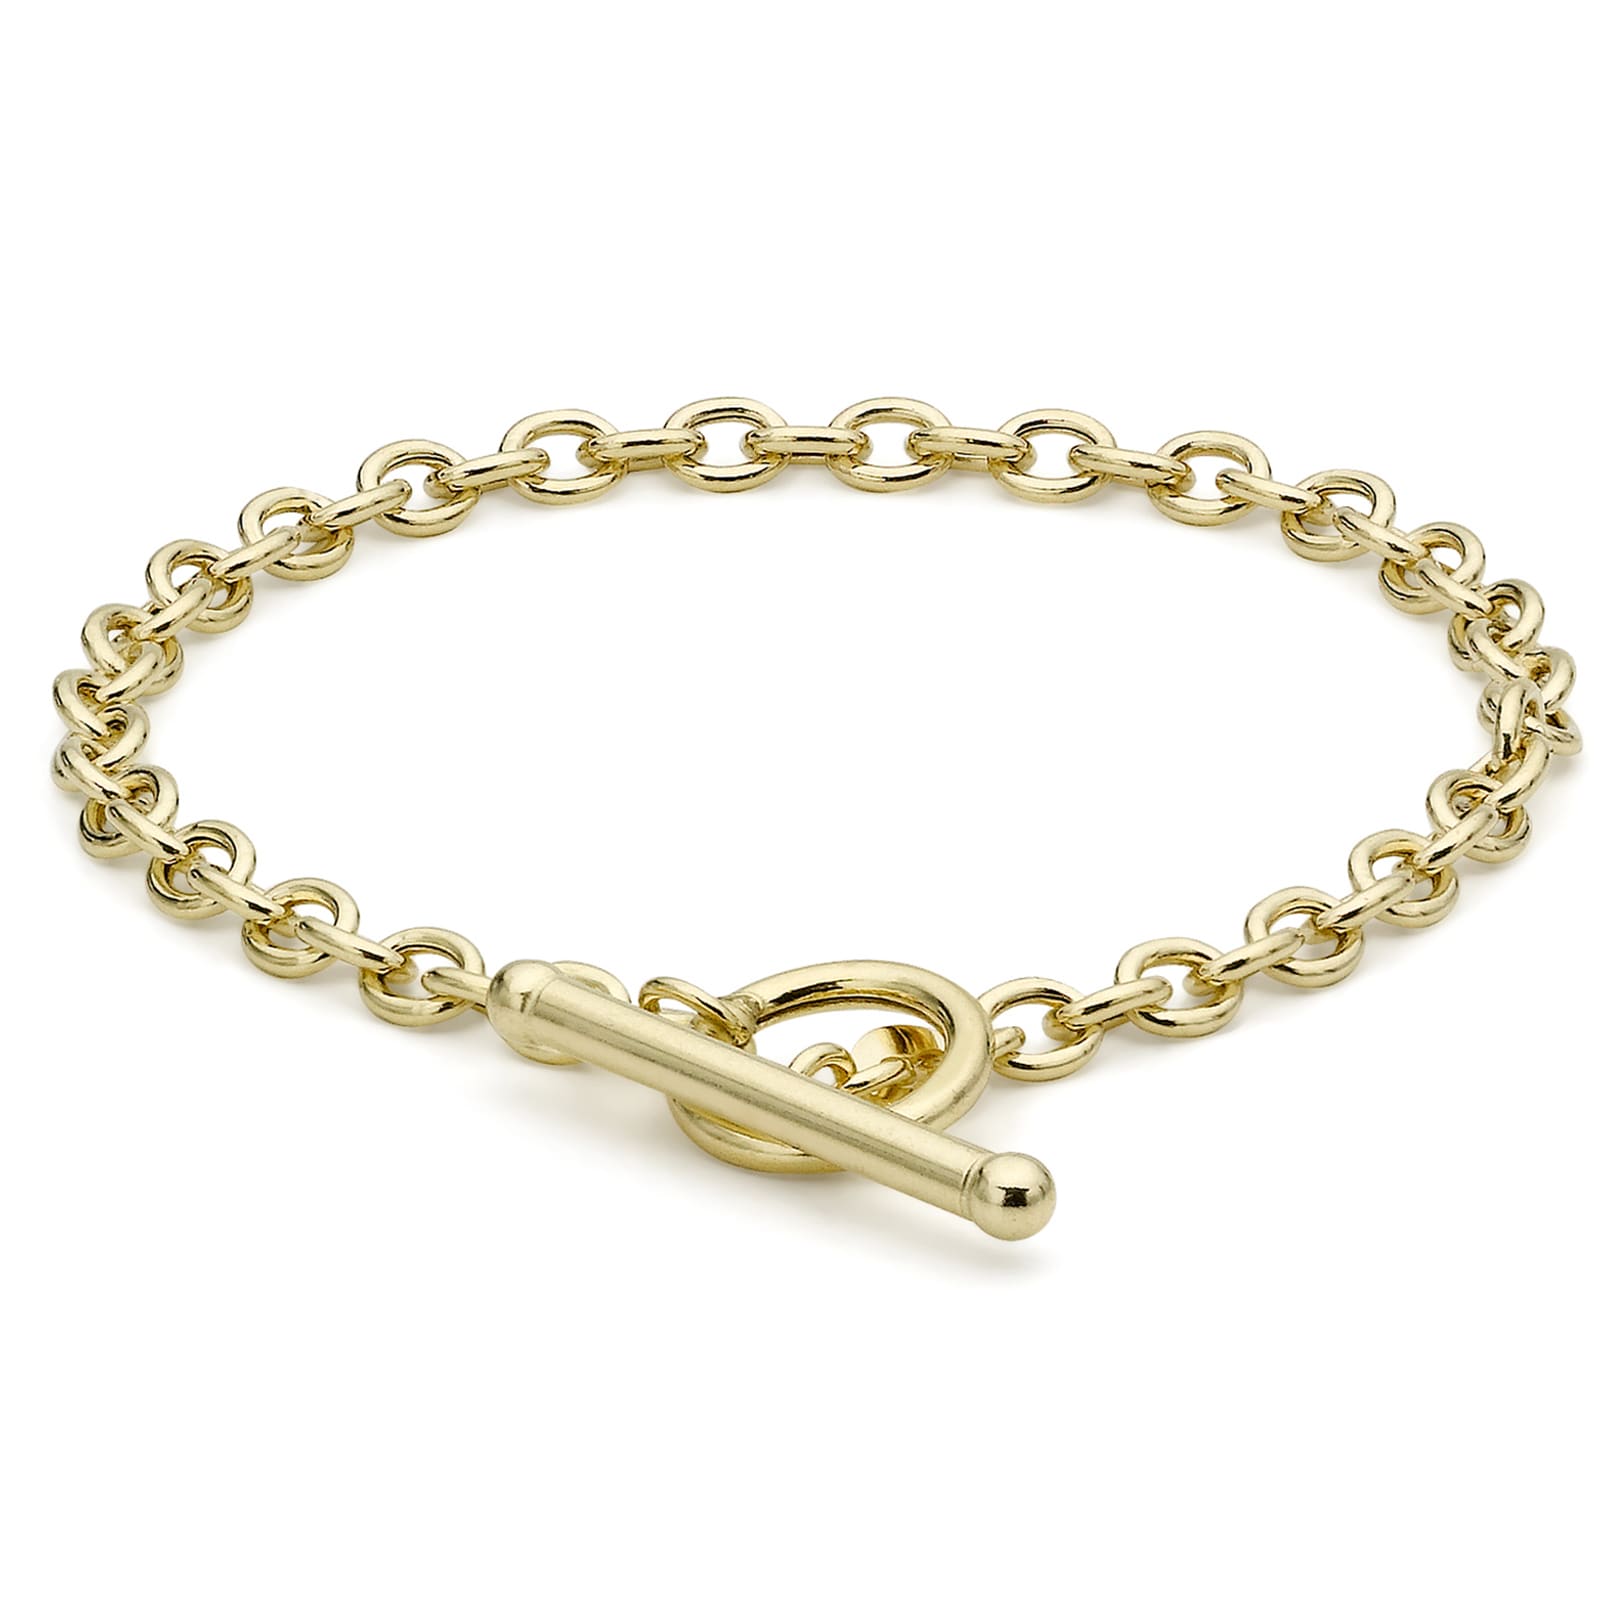 Double Belcher Bracelet Plain & Patterned, 9ct Gold Dipped – Unisex, 88g |  eBay